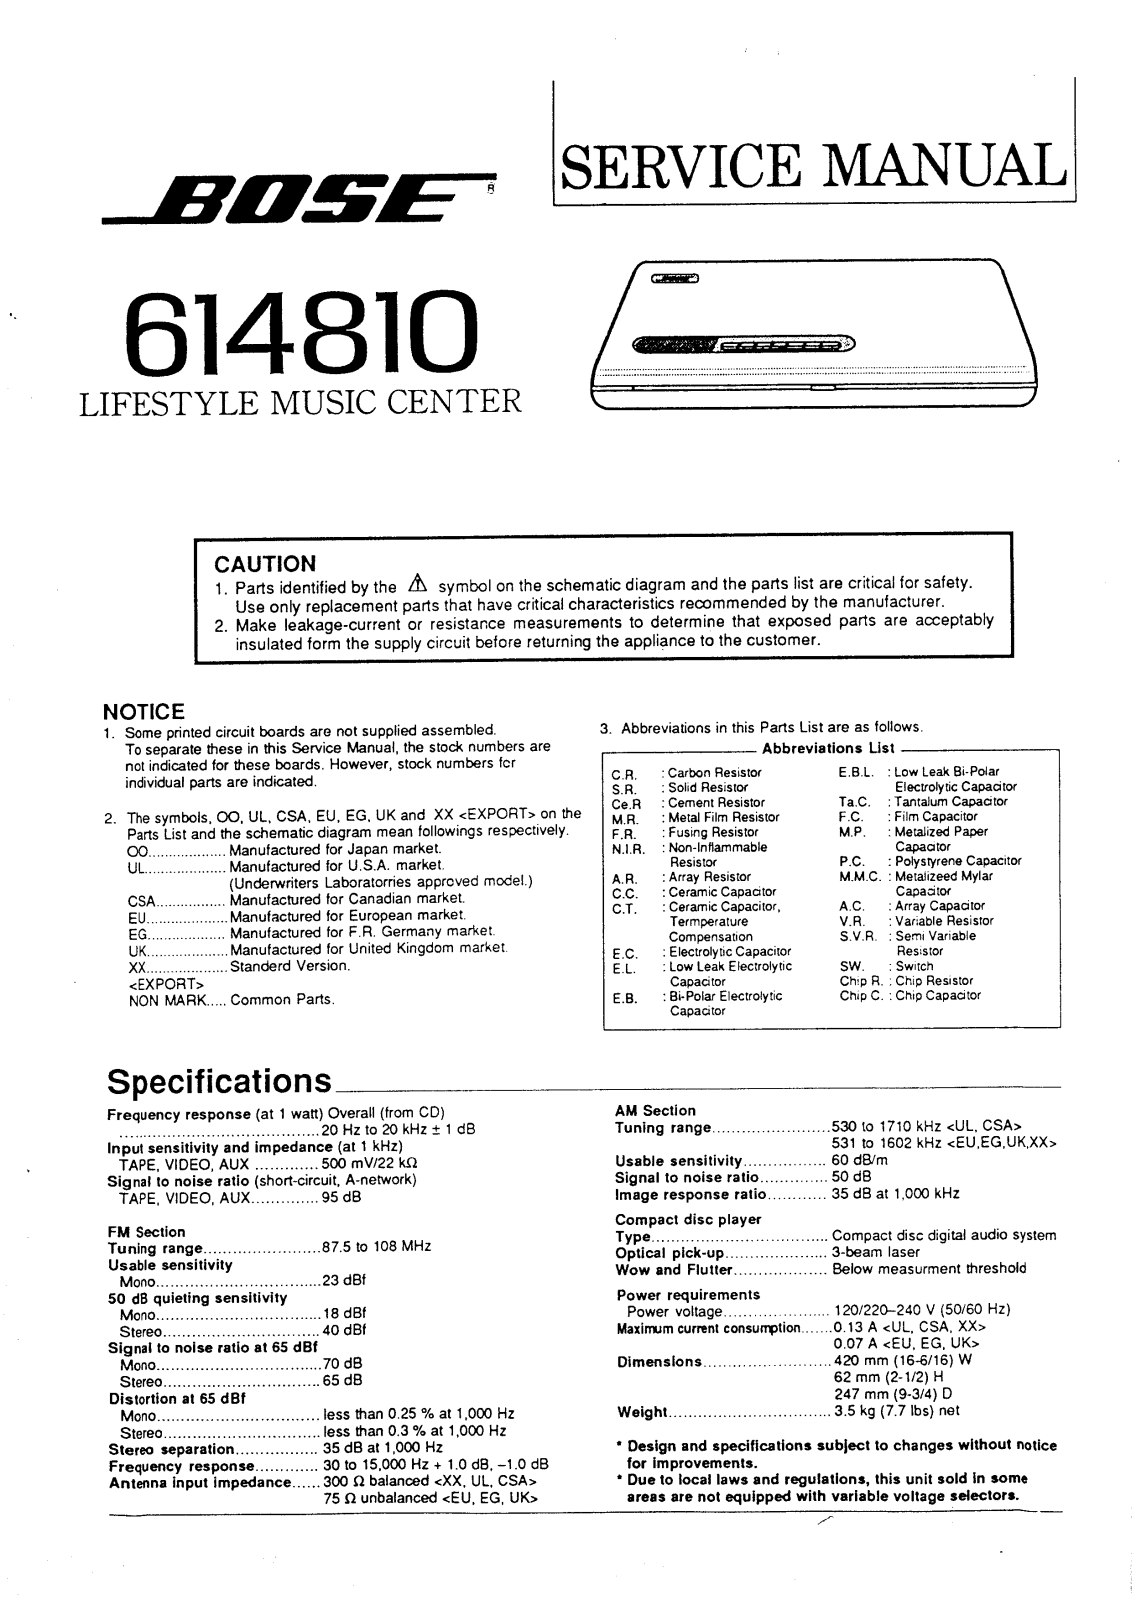 Bose 614810 Service Manual